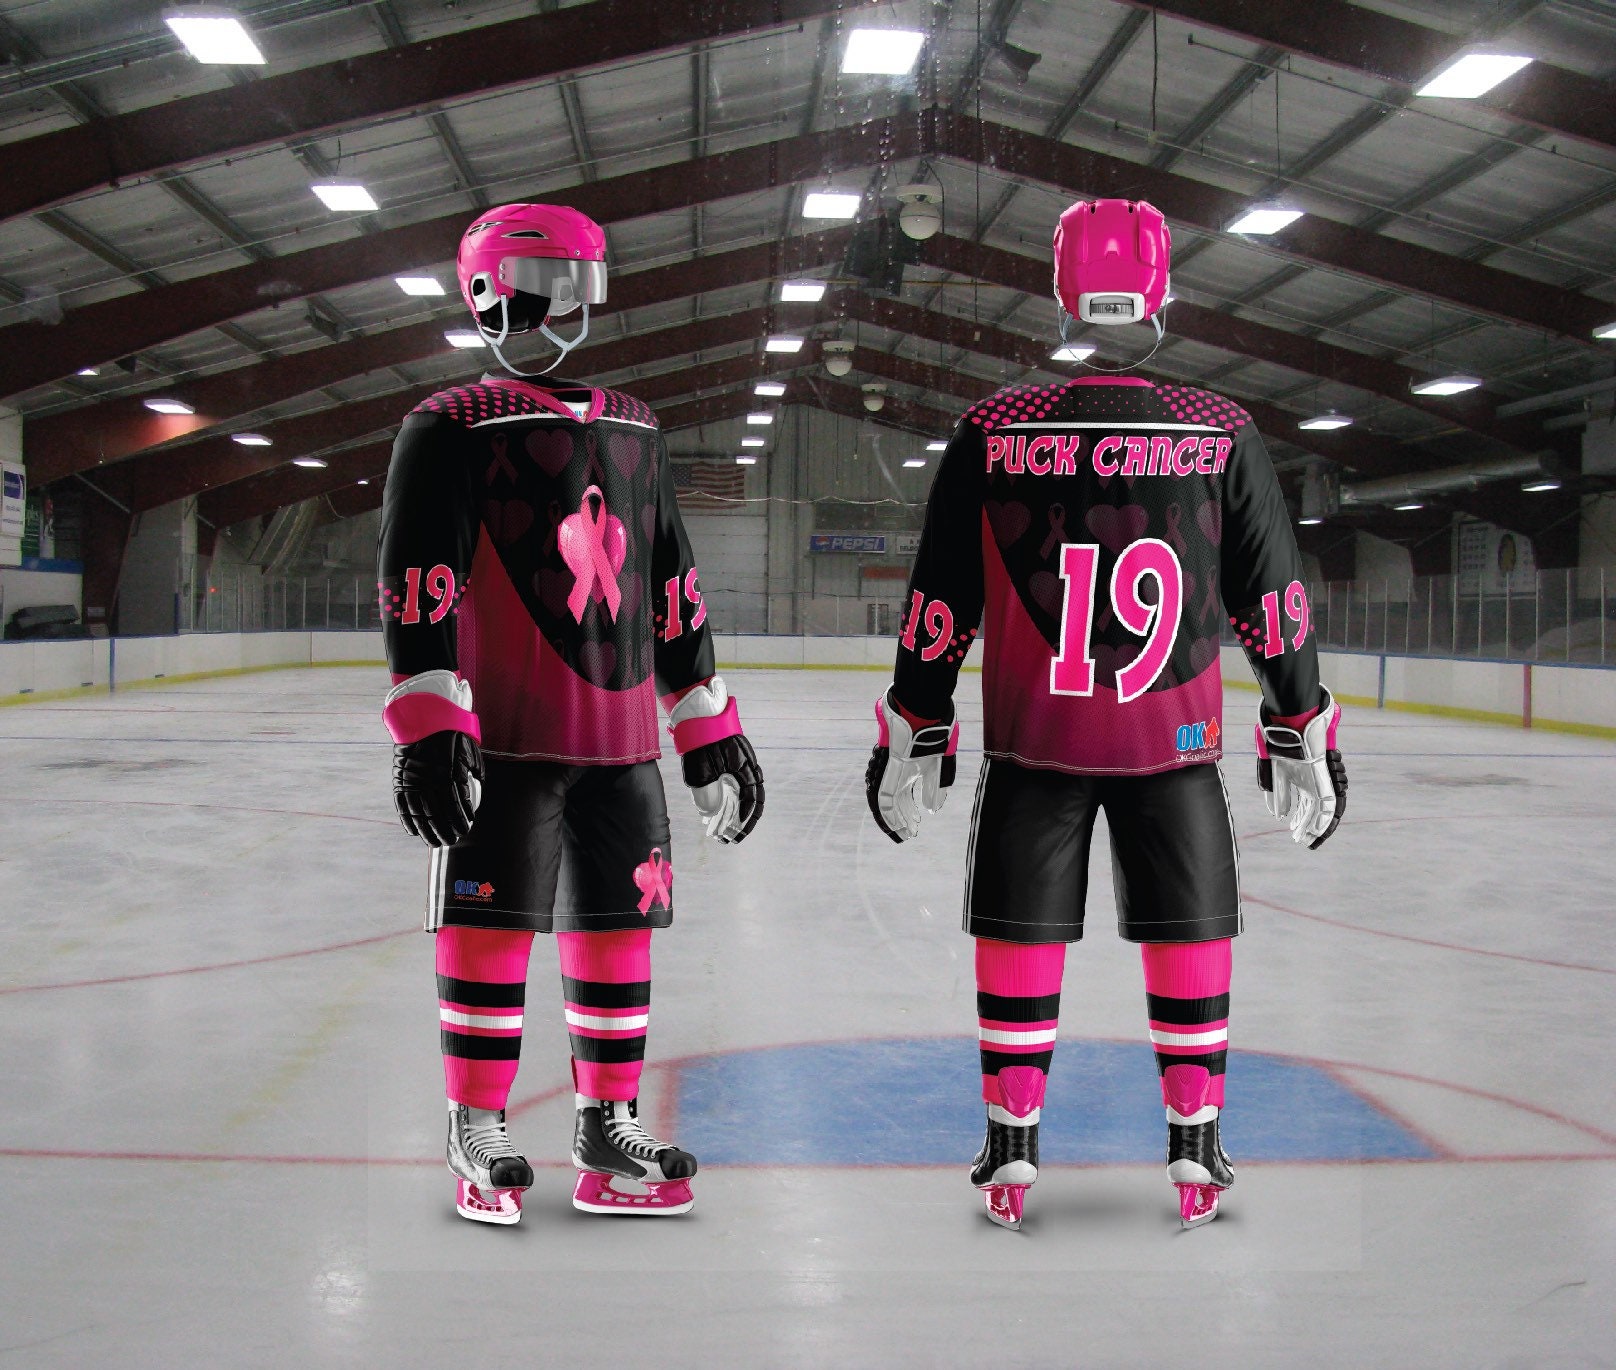 Kraken Hockey Fights Cancer Hood Sweatshirt – Gameday Sports Shop